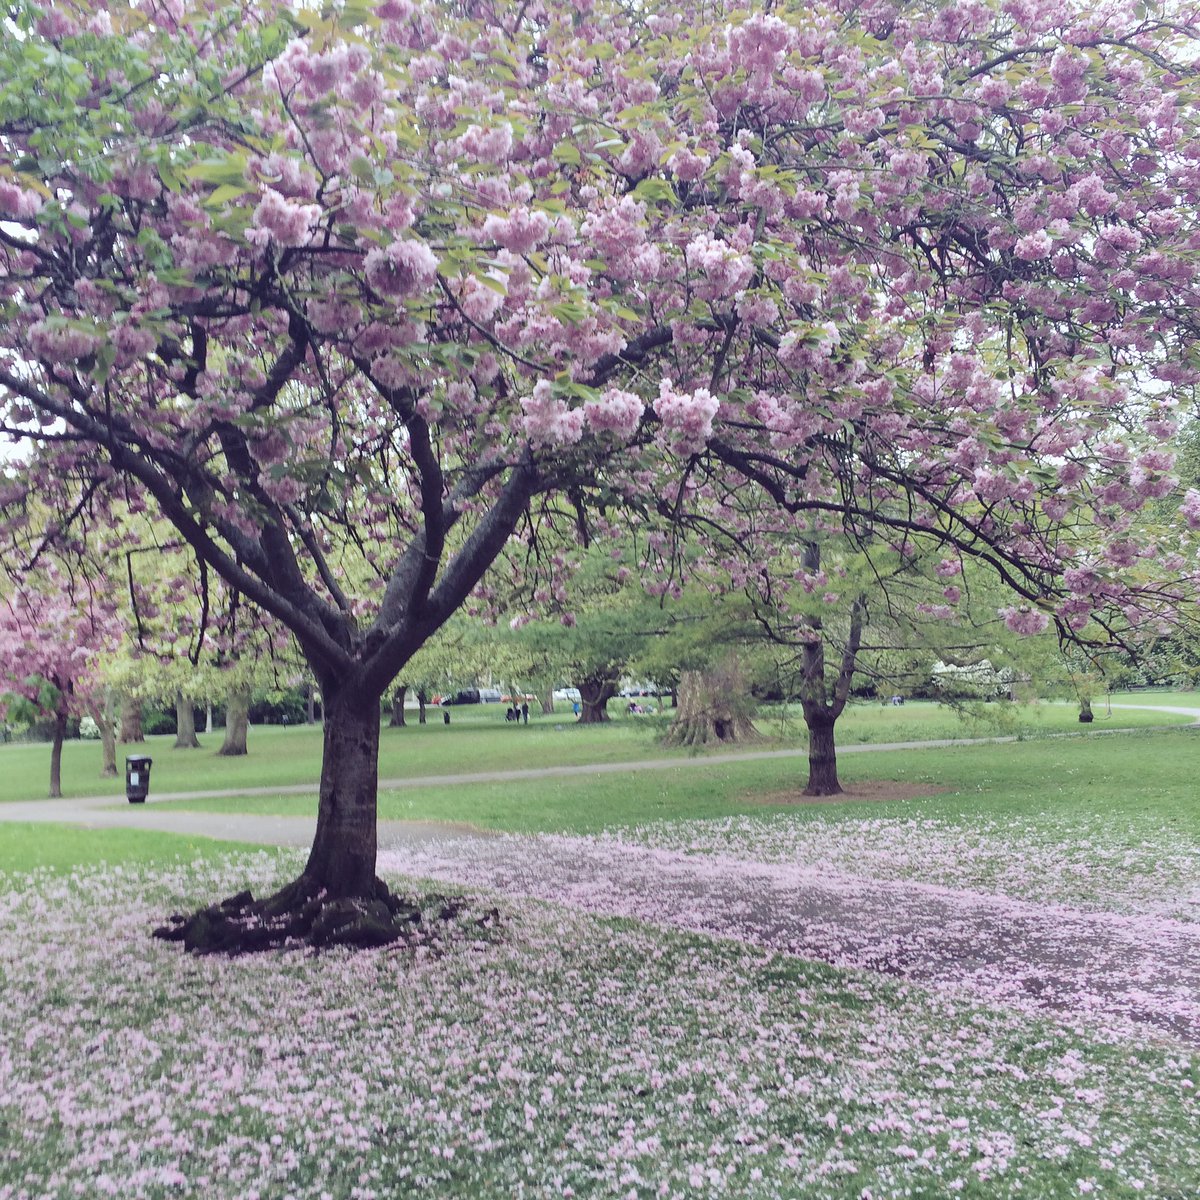 Loving the blossom in #henriettapark - makes for the prettiest Saturday strolling 👌 #prettyinpink #beautifulbath #visitbath